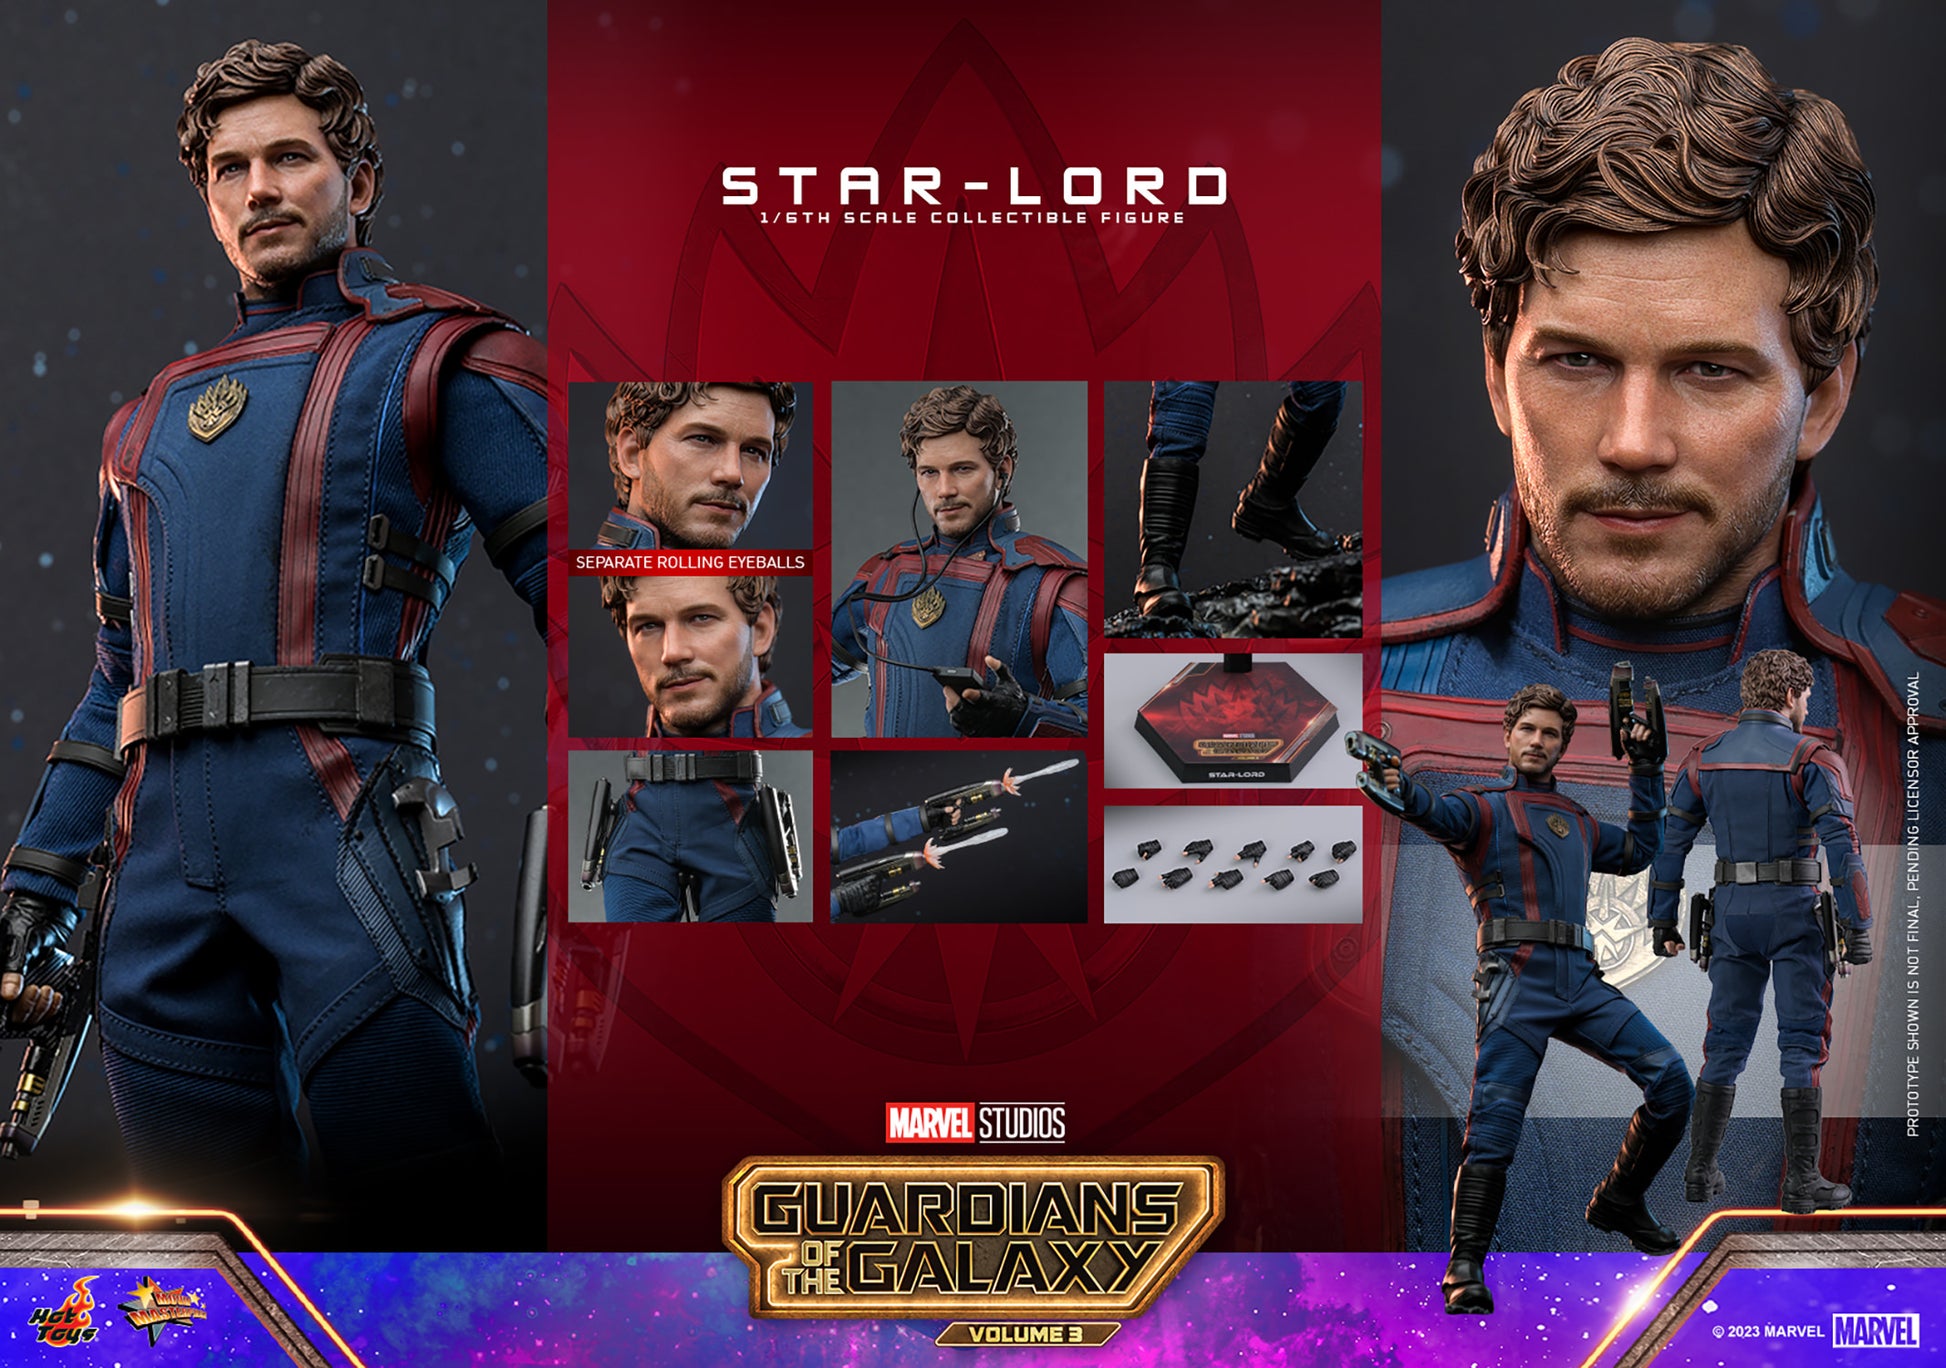  Iron Studios Avengers: Endgame, Star Lord, 31 cm Scale